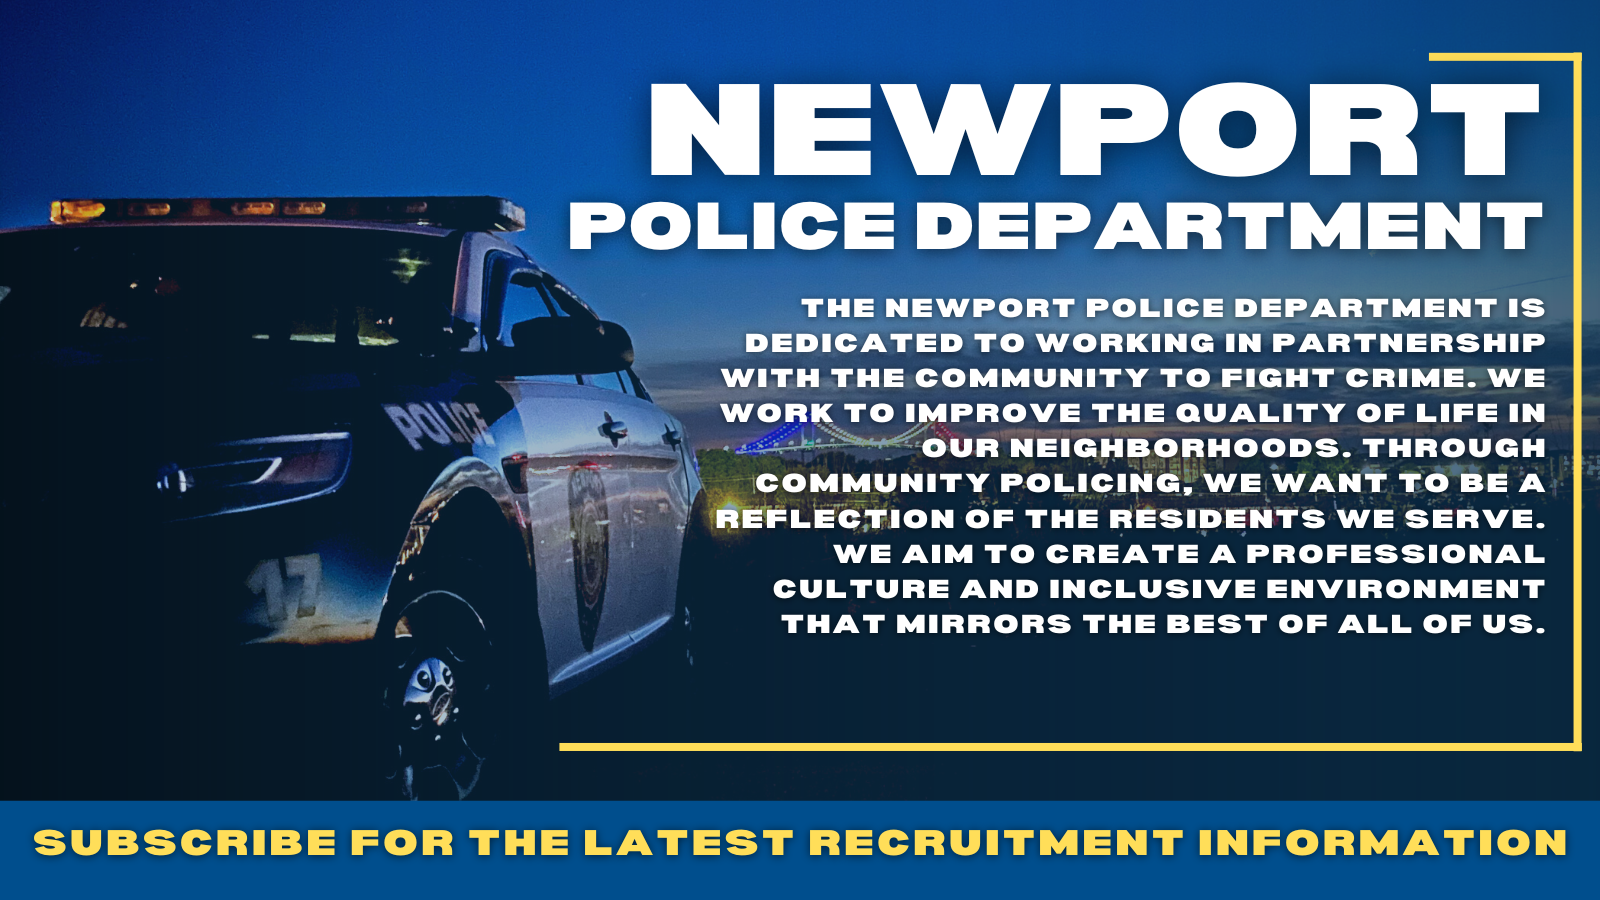 Newport Police Department, RI Police Jobs